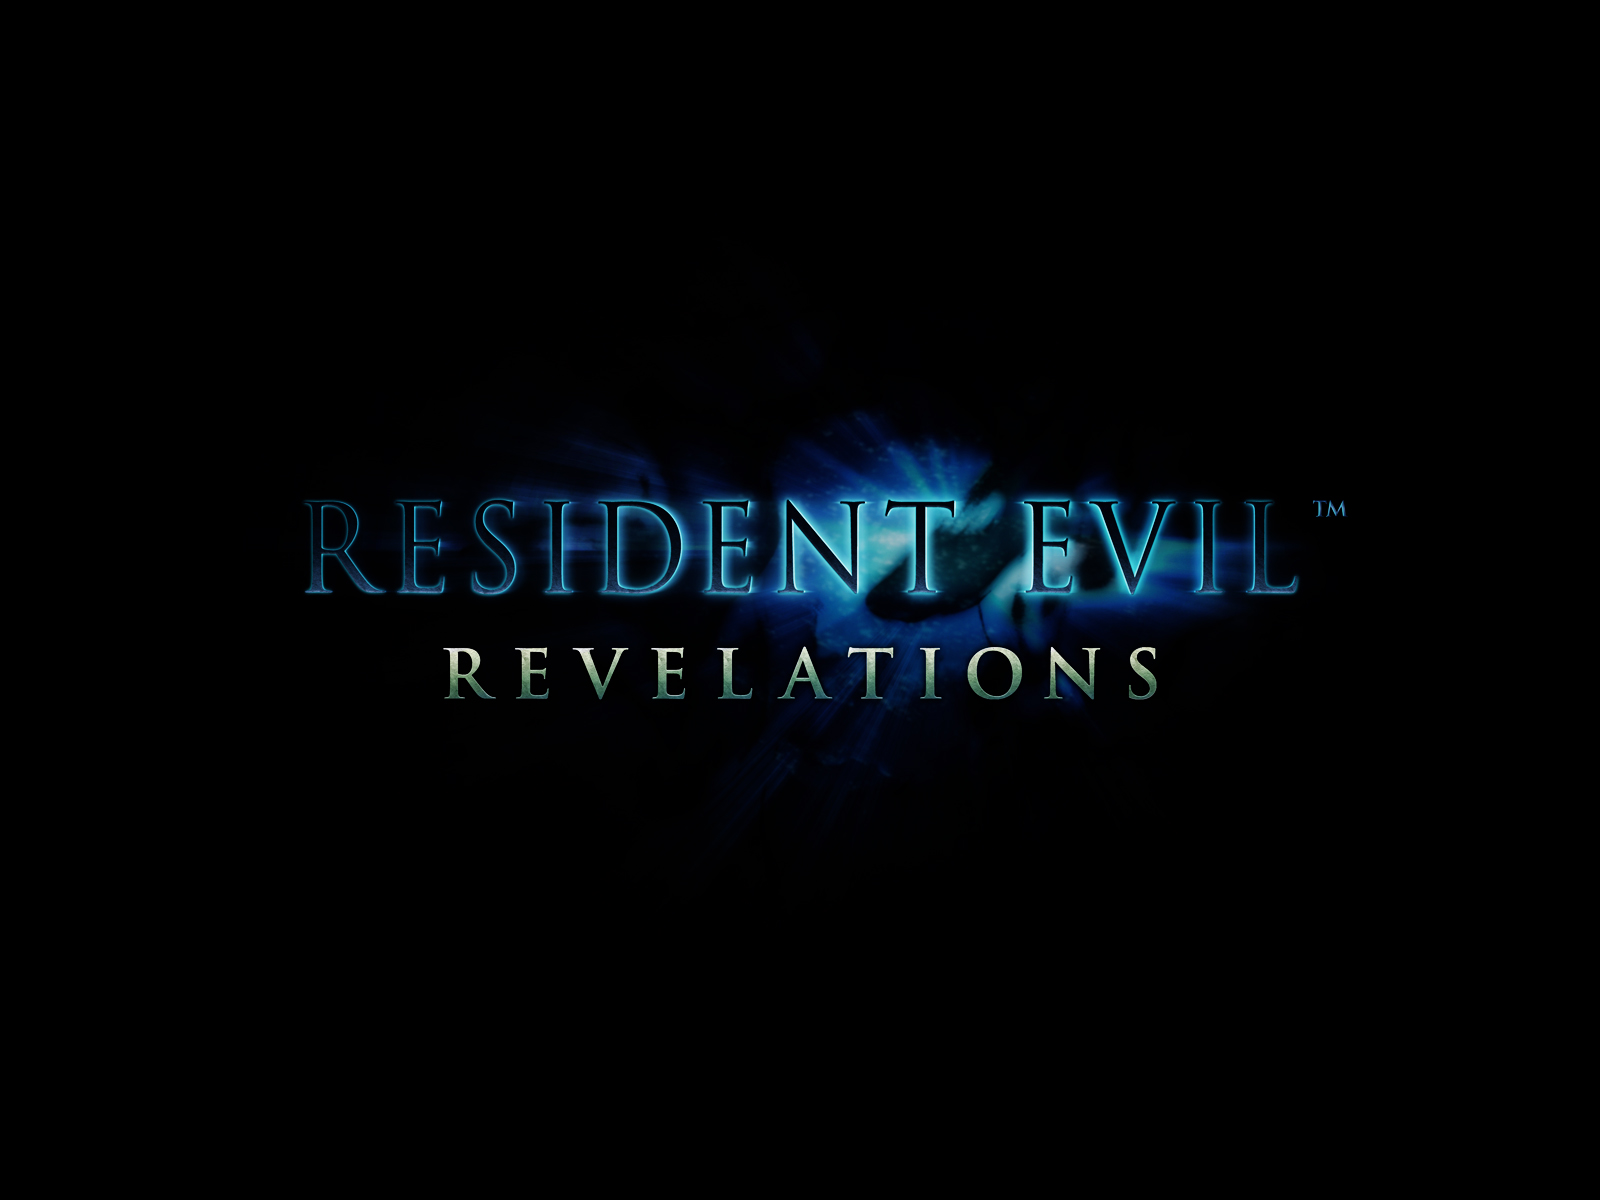 Vista And Xp Wallpaper Resident Evil Revelations HD Game